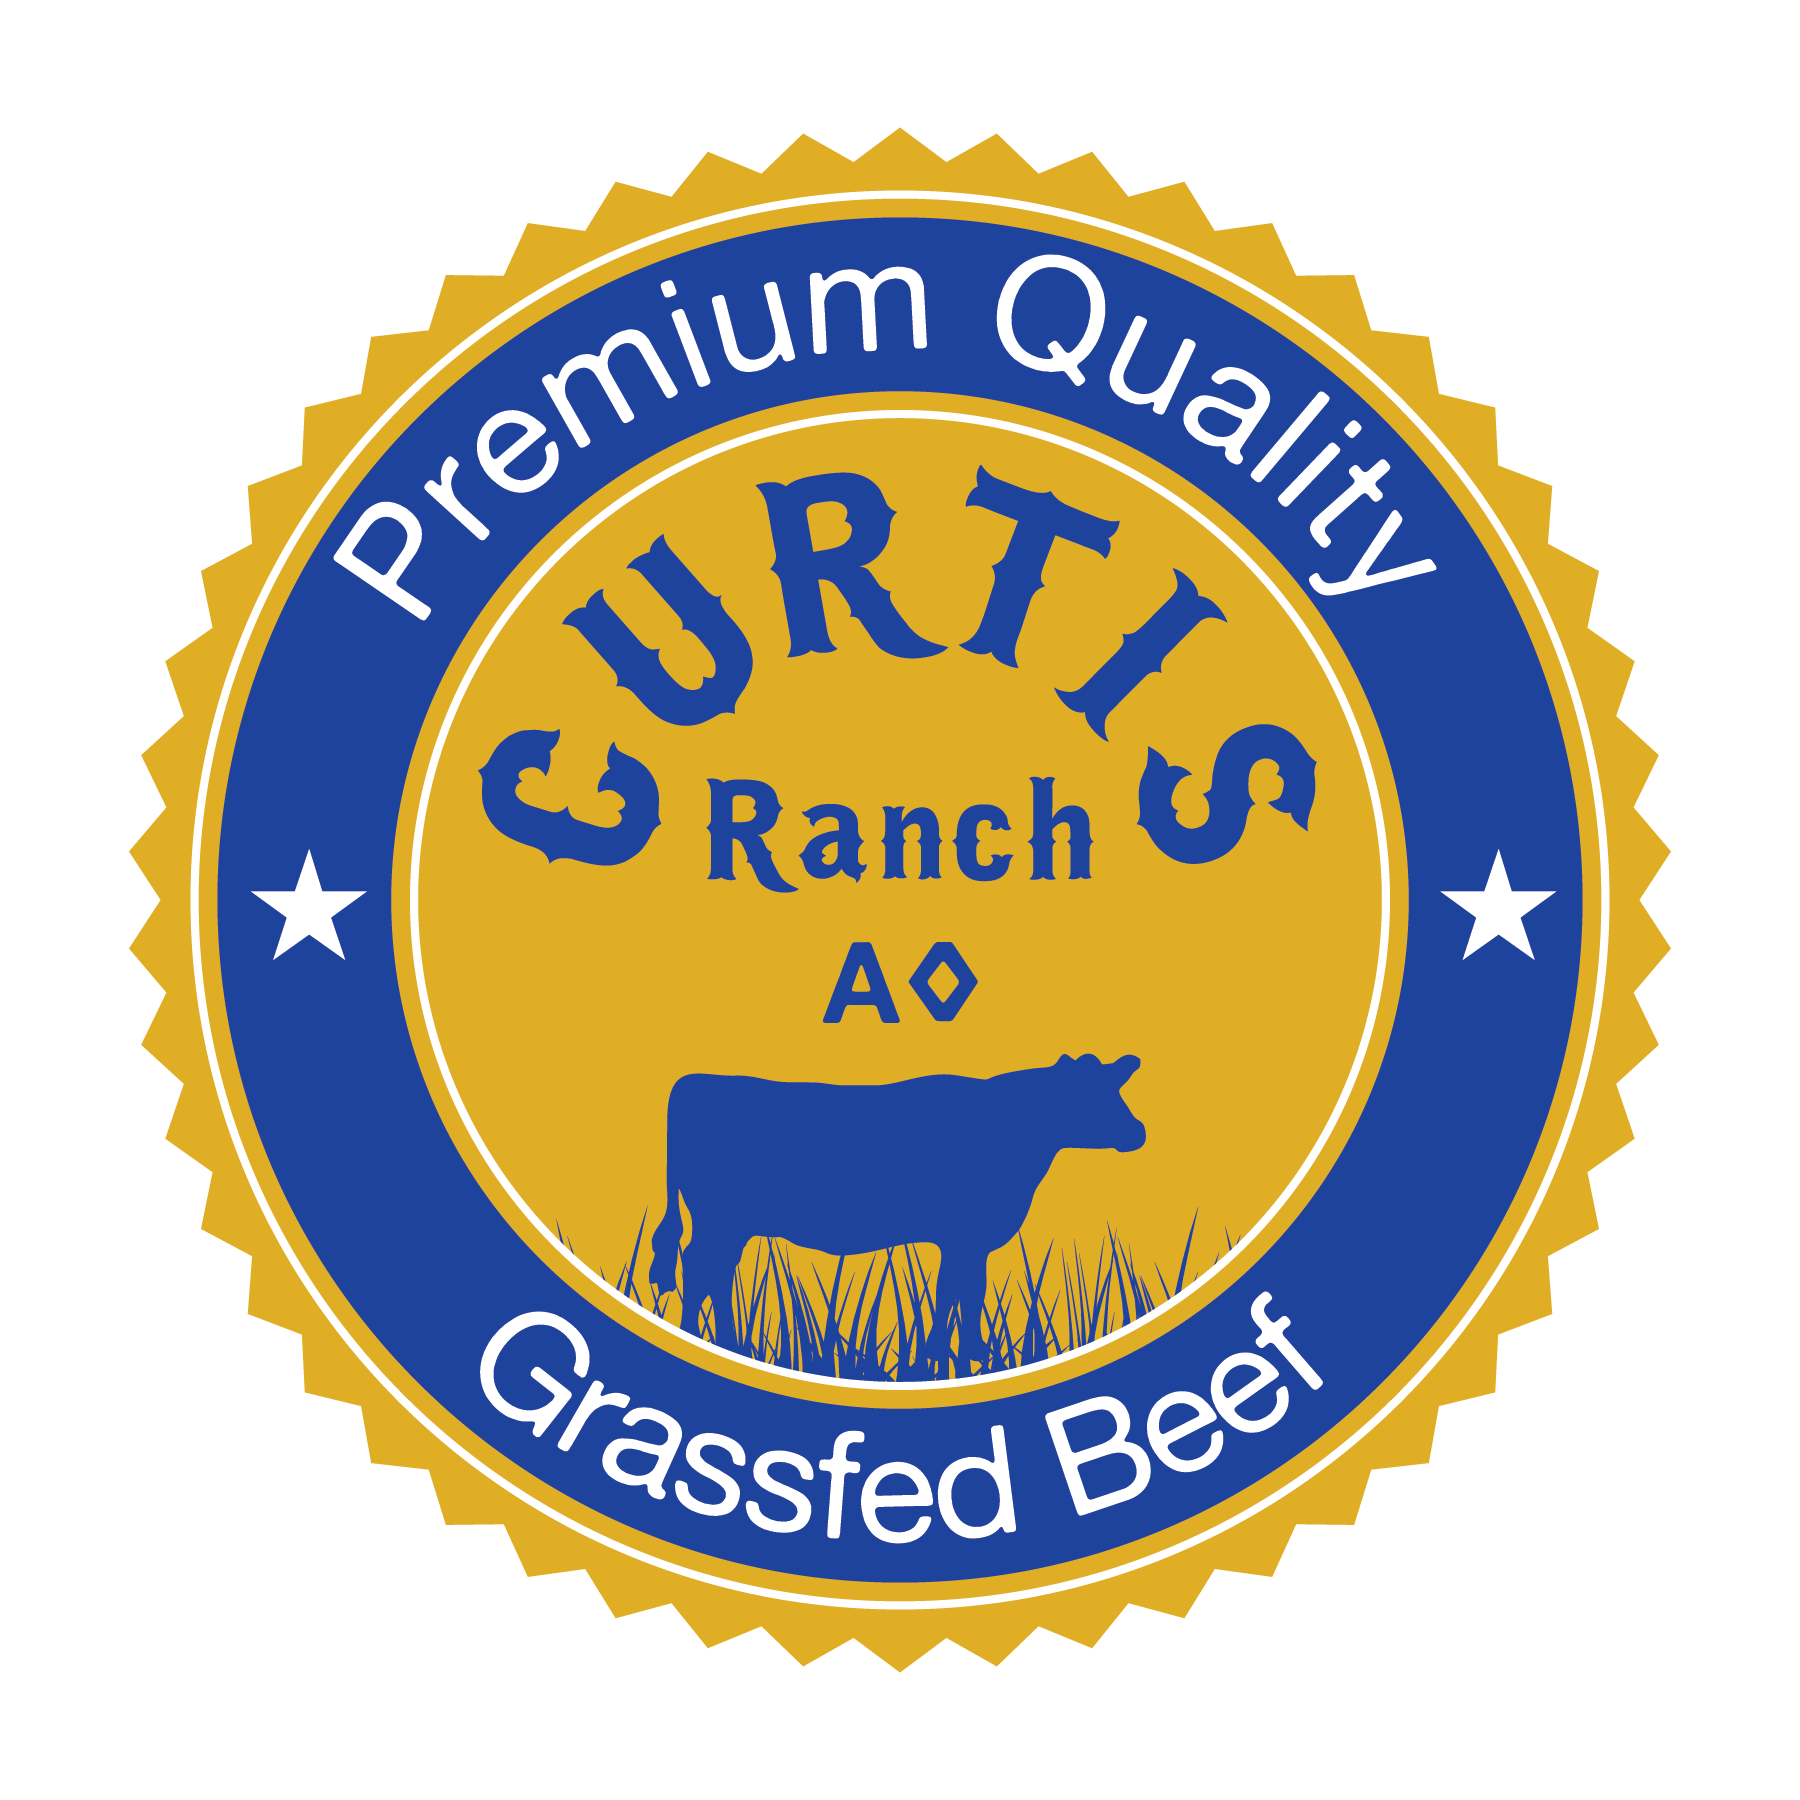 A Diamond Brand Premium Quality Grassfed Beef